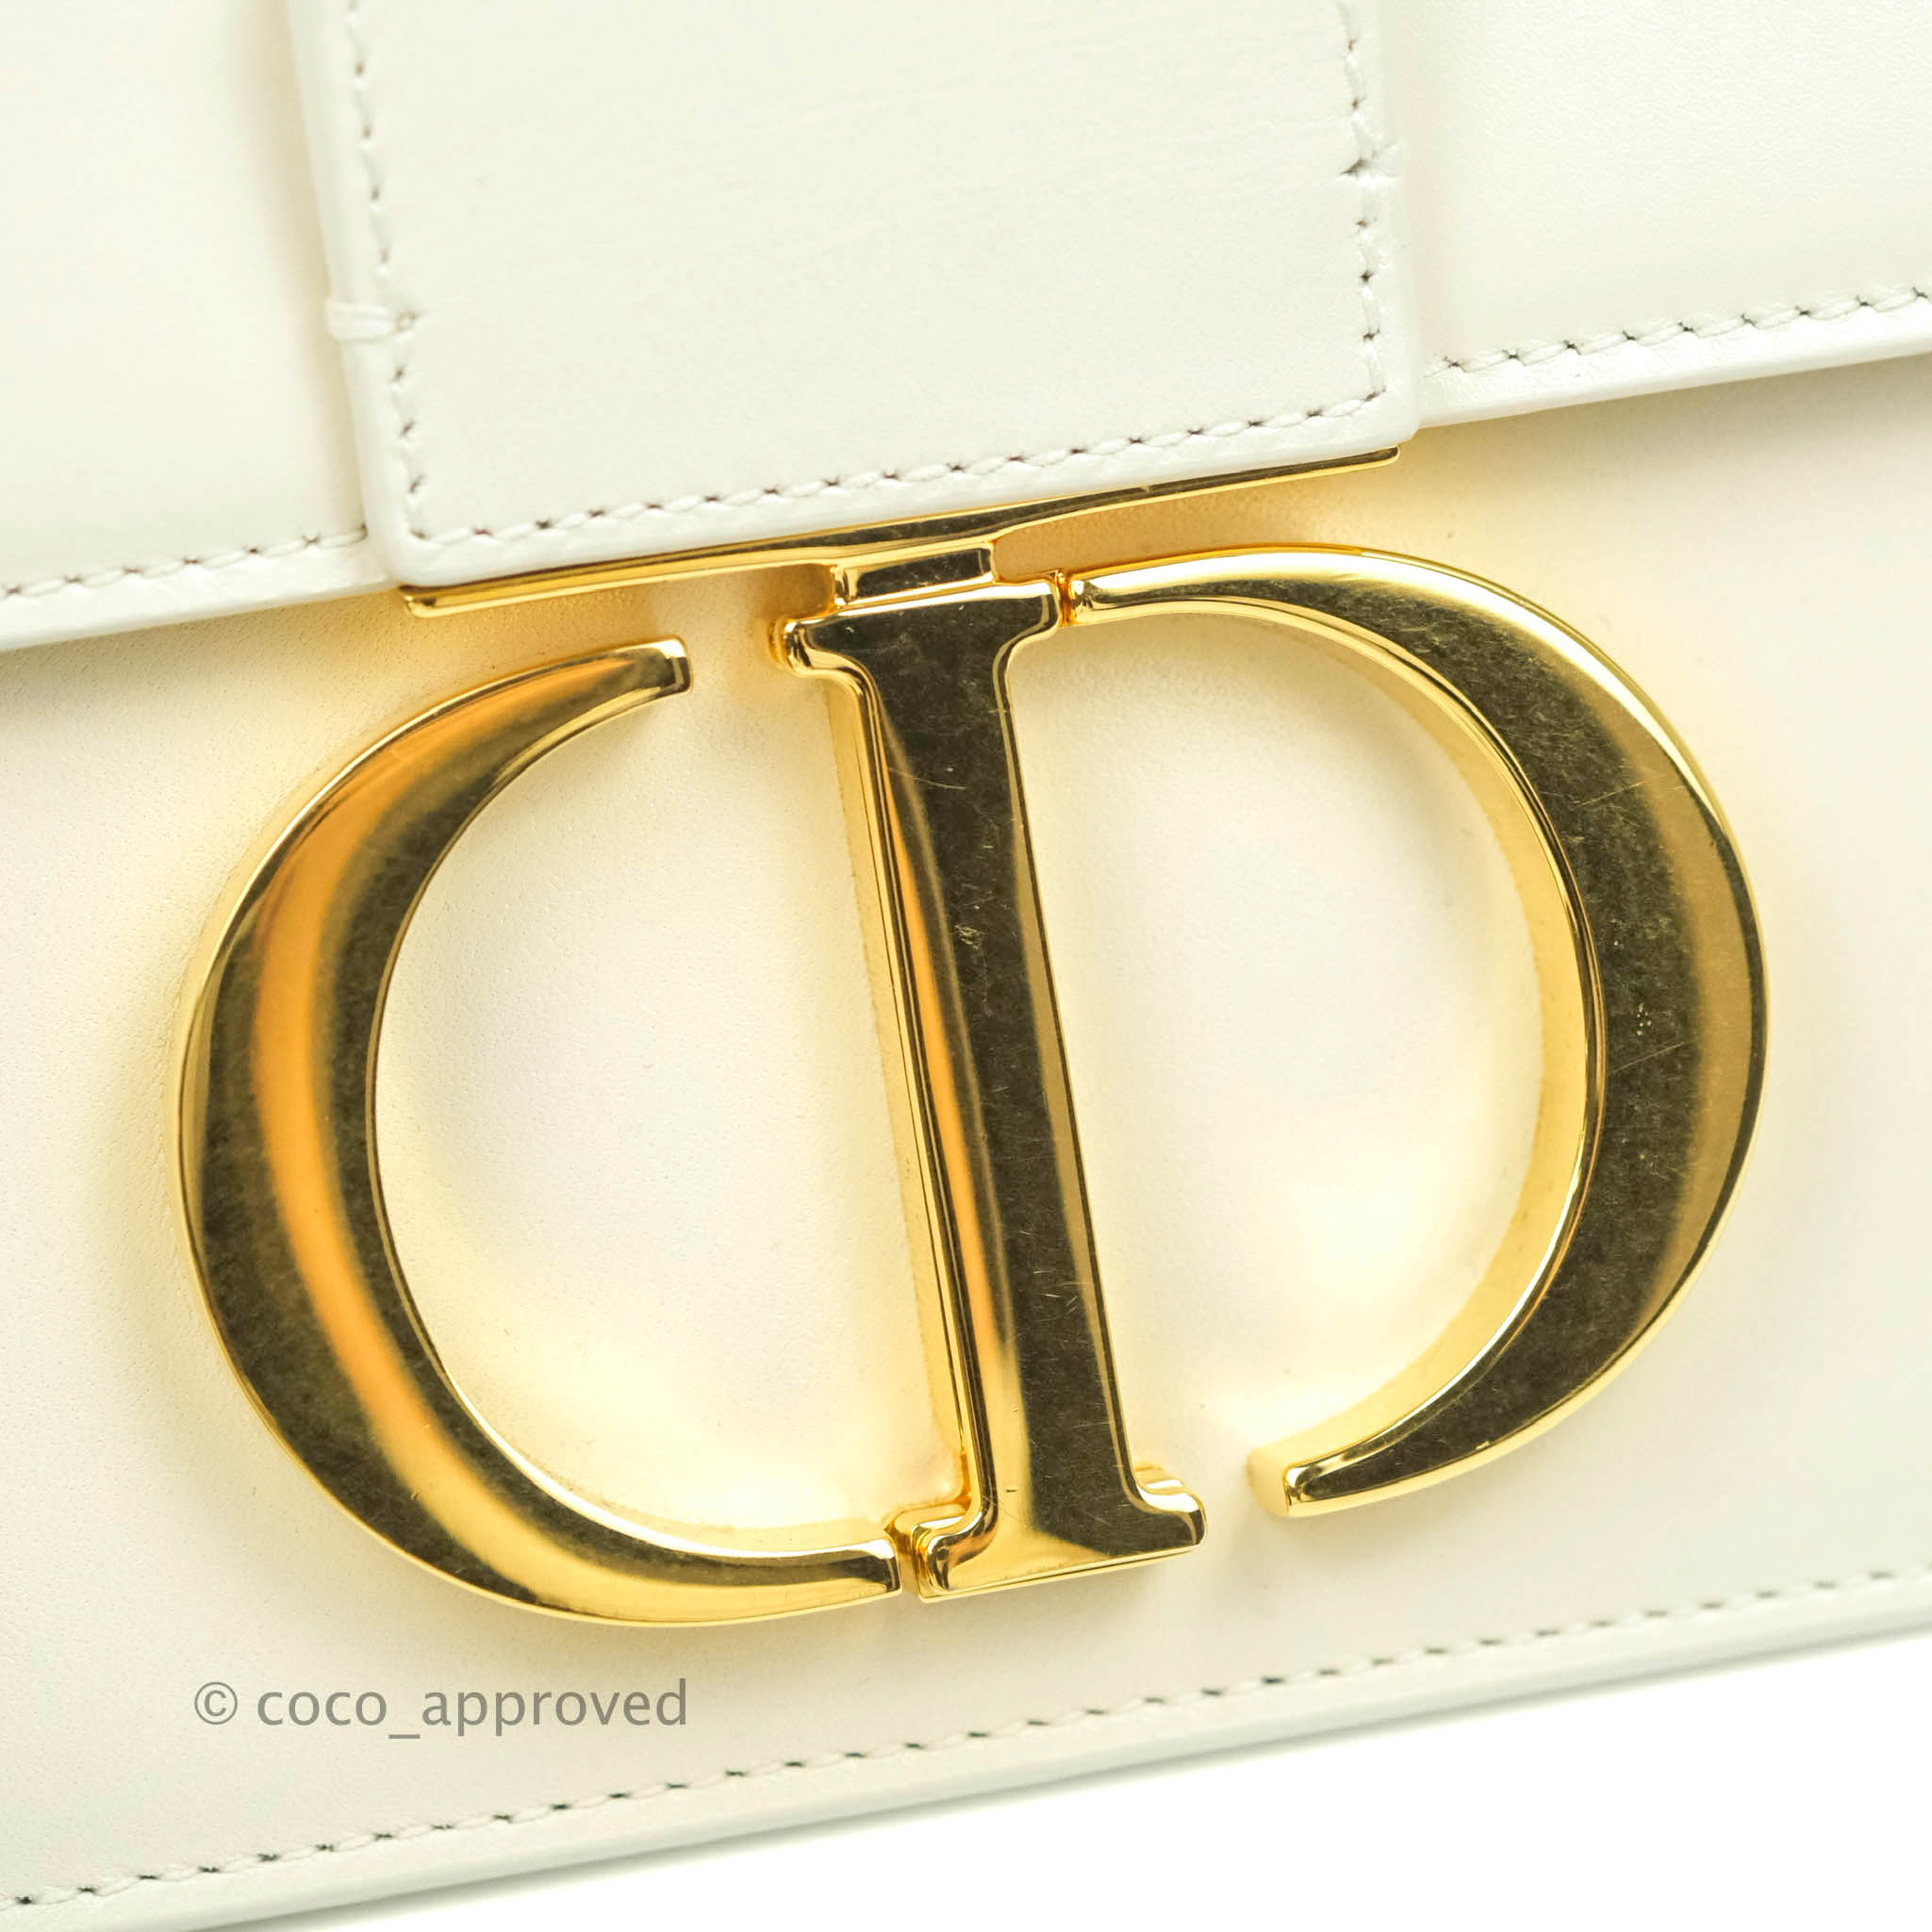 30 montaigne leather handbag Dior White in Leather - 21605762